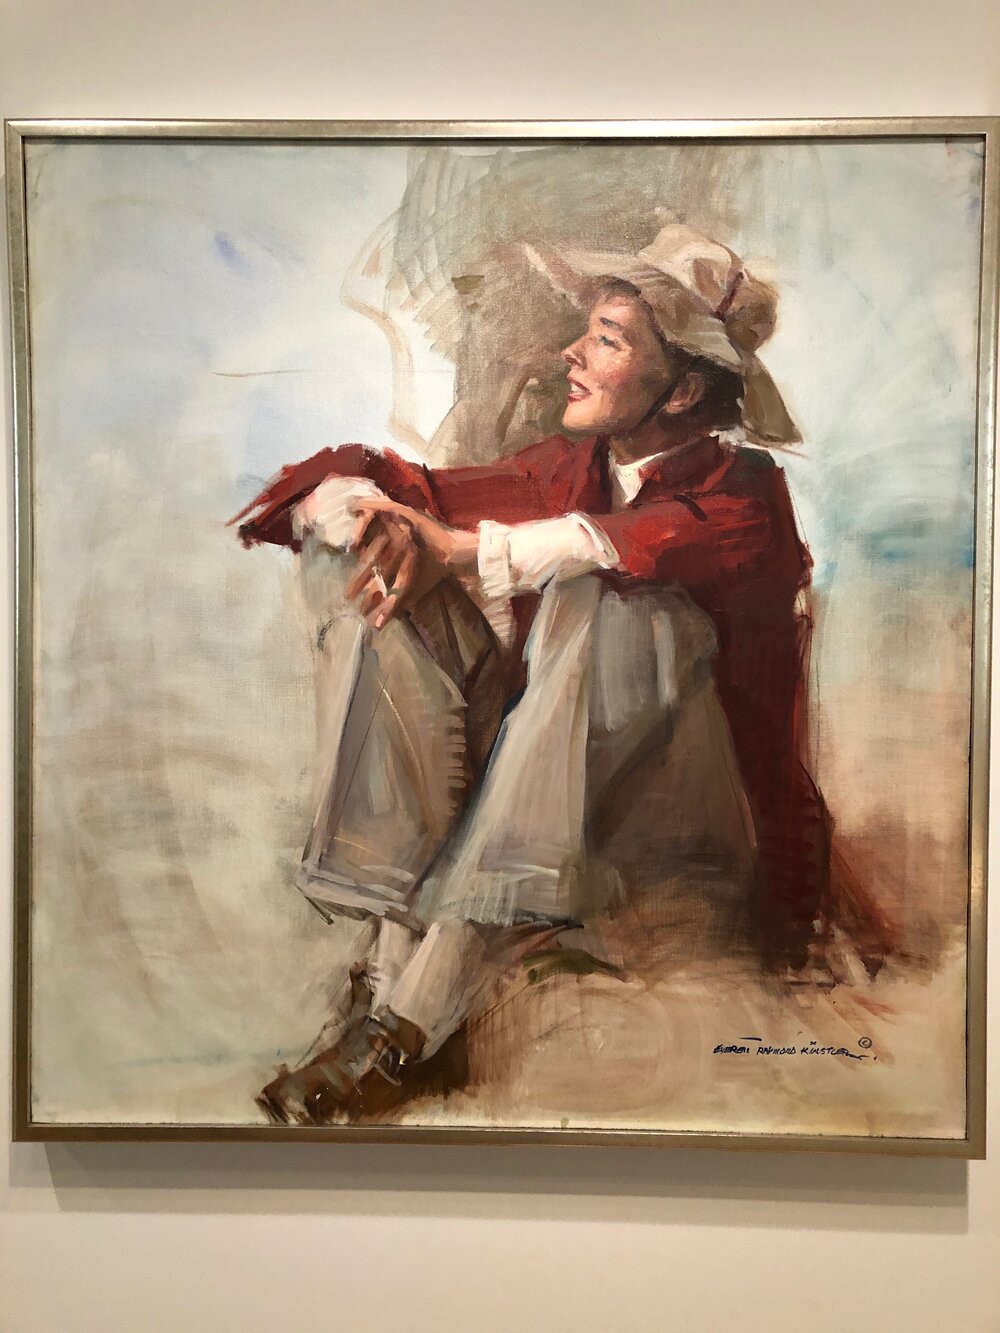 Katherine Hepburn at the National Portrait Gallery